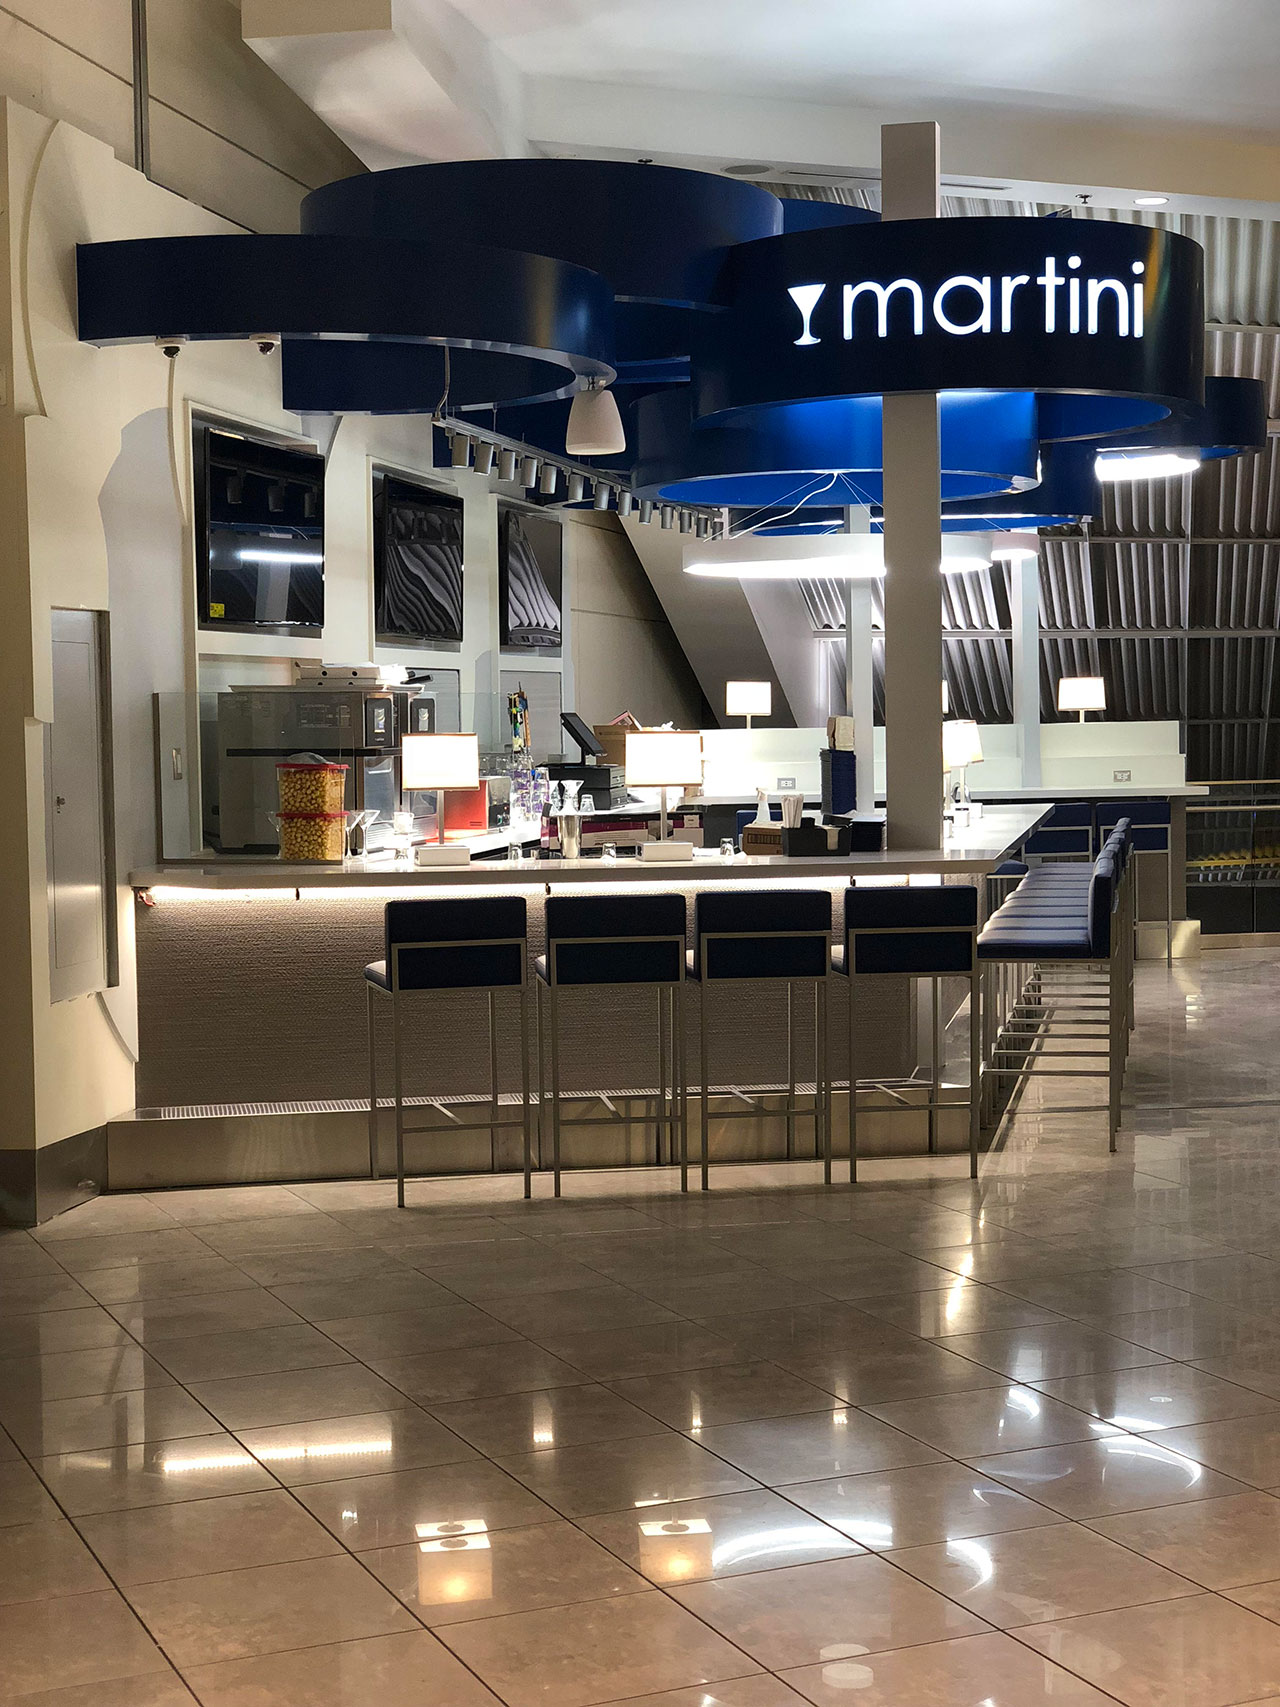 Martini Bar, Baltimore/Washington International Airport